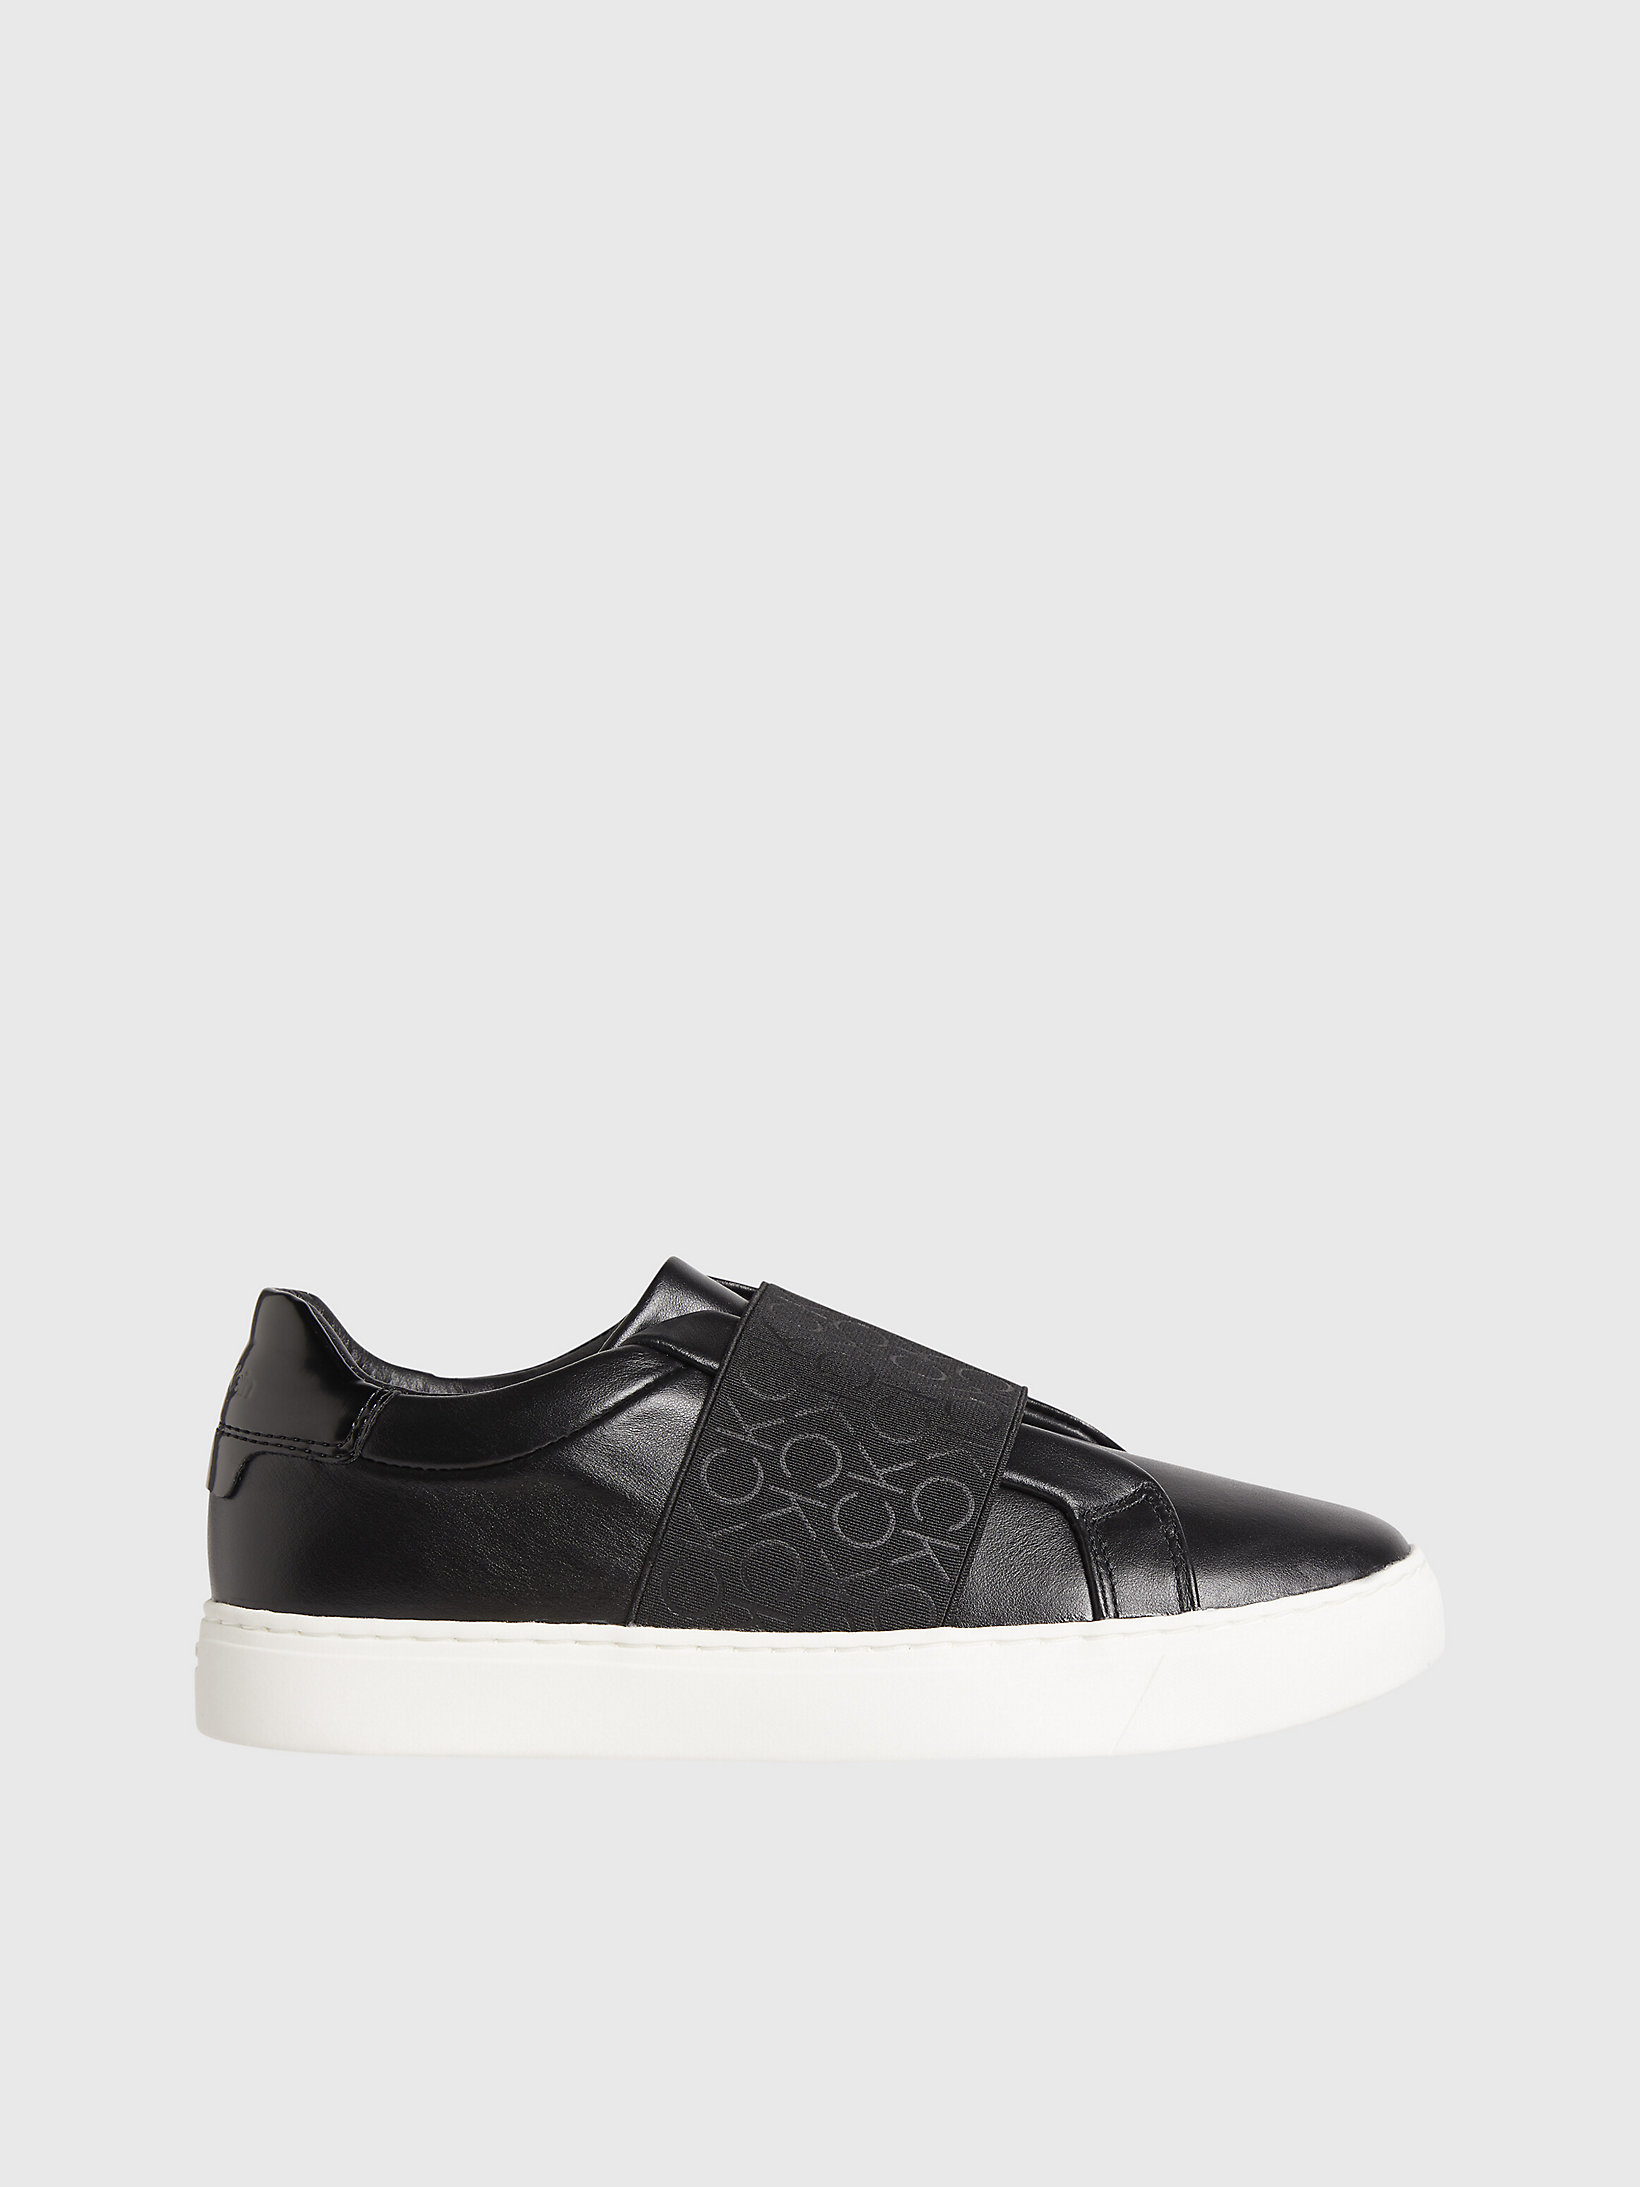 CK Black Leather Slip-On Shoes undefined women Calvin Klein